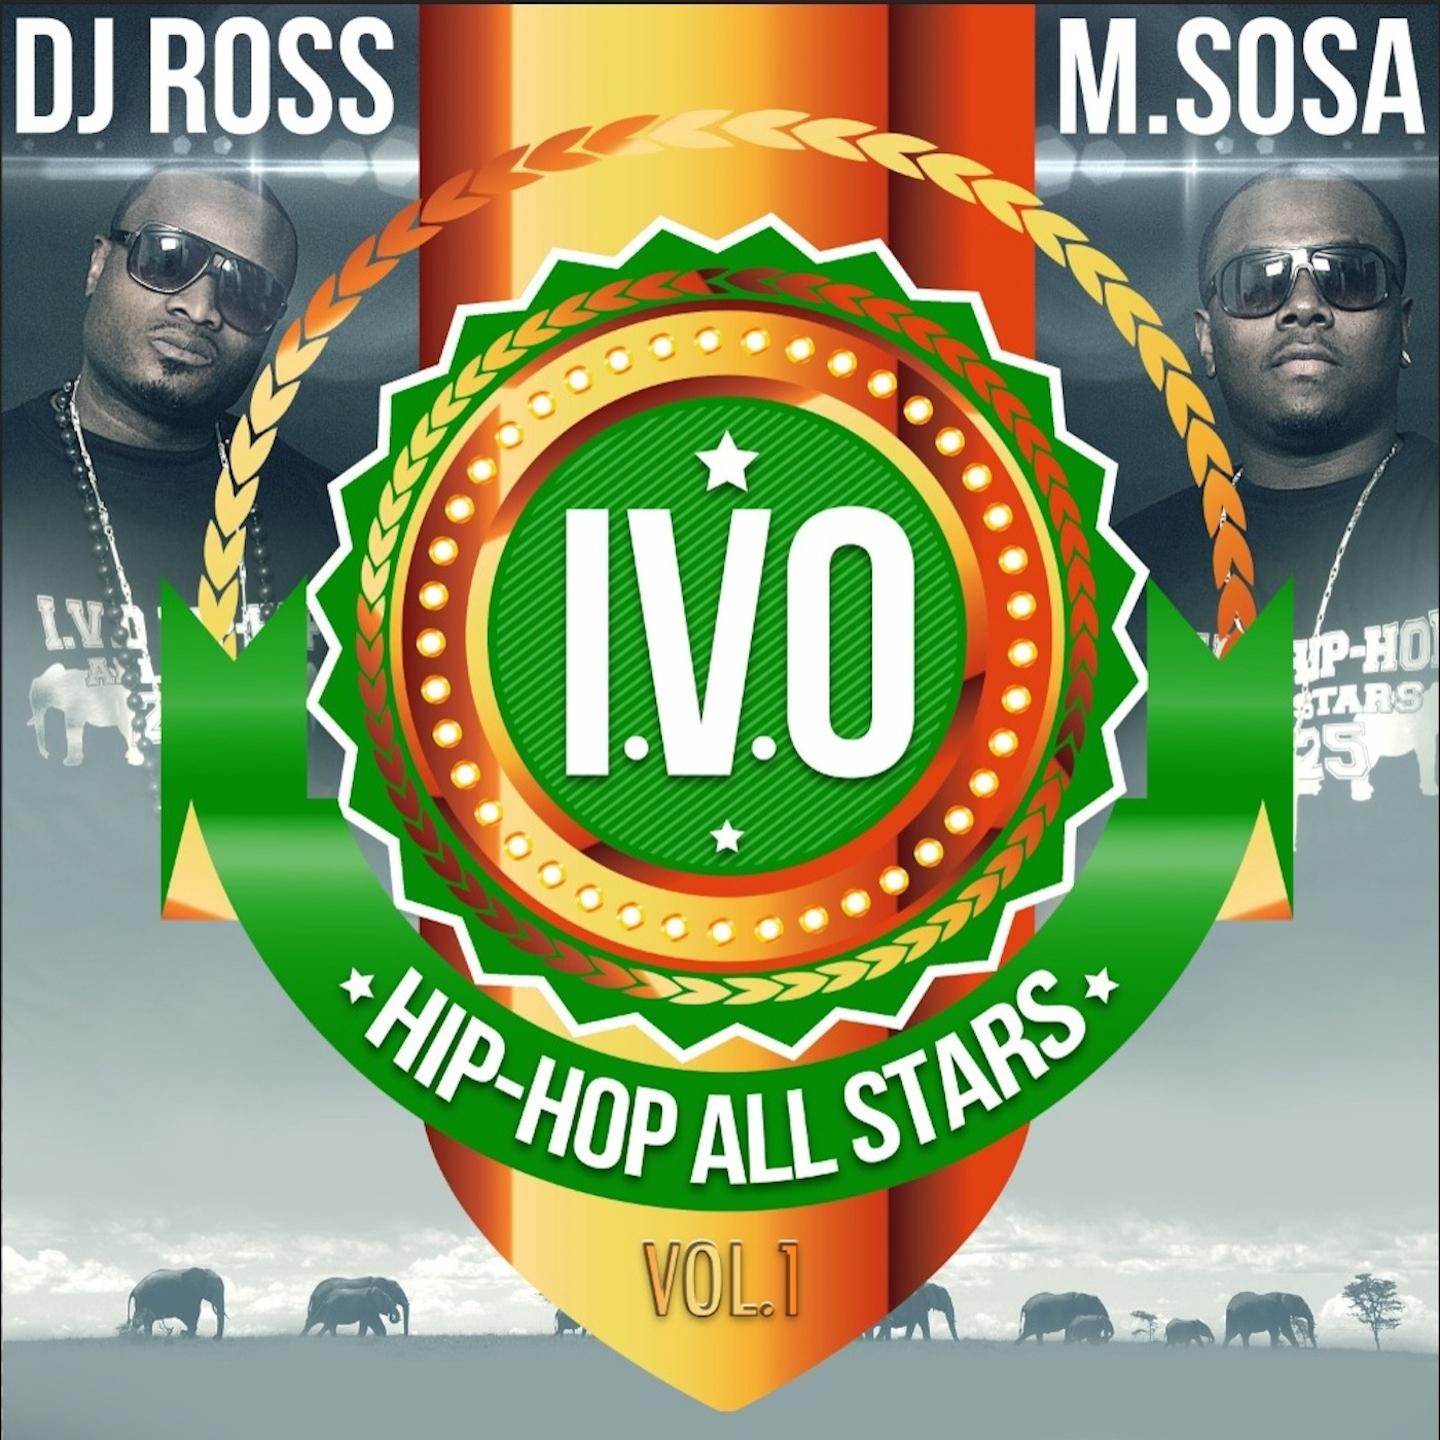 Ivo Hip Hop All Stars, Vol. 1